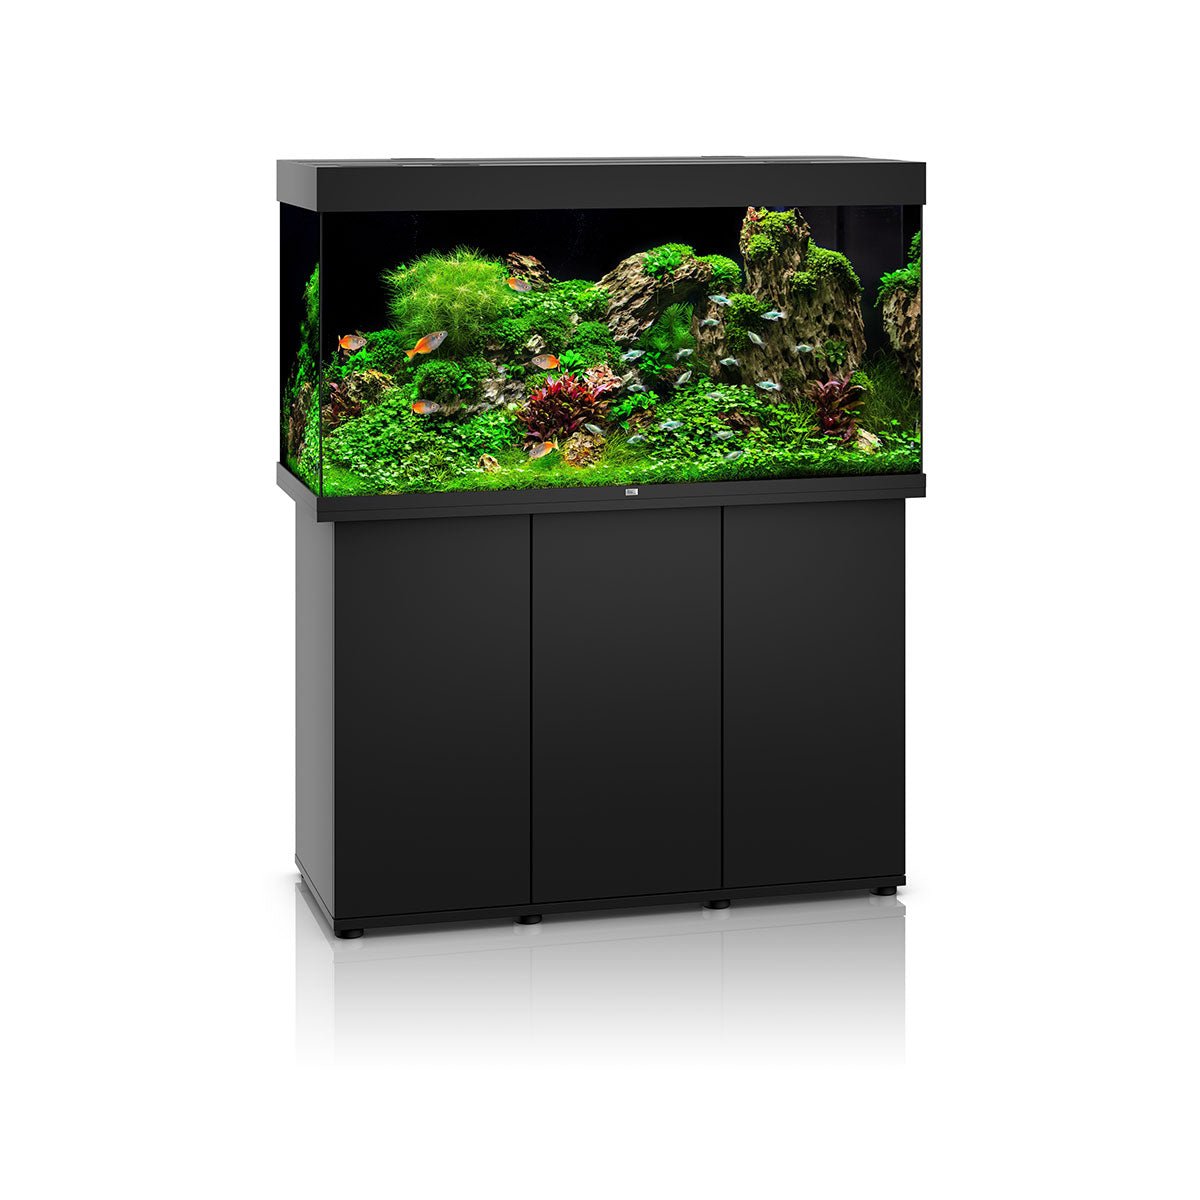 Juwel Rio 350 LED Aquarium and Cabinet (Black) - Charterhouse Aquatics